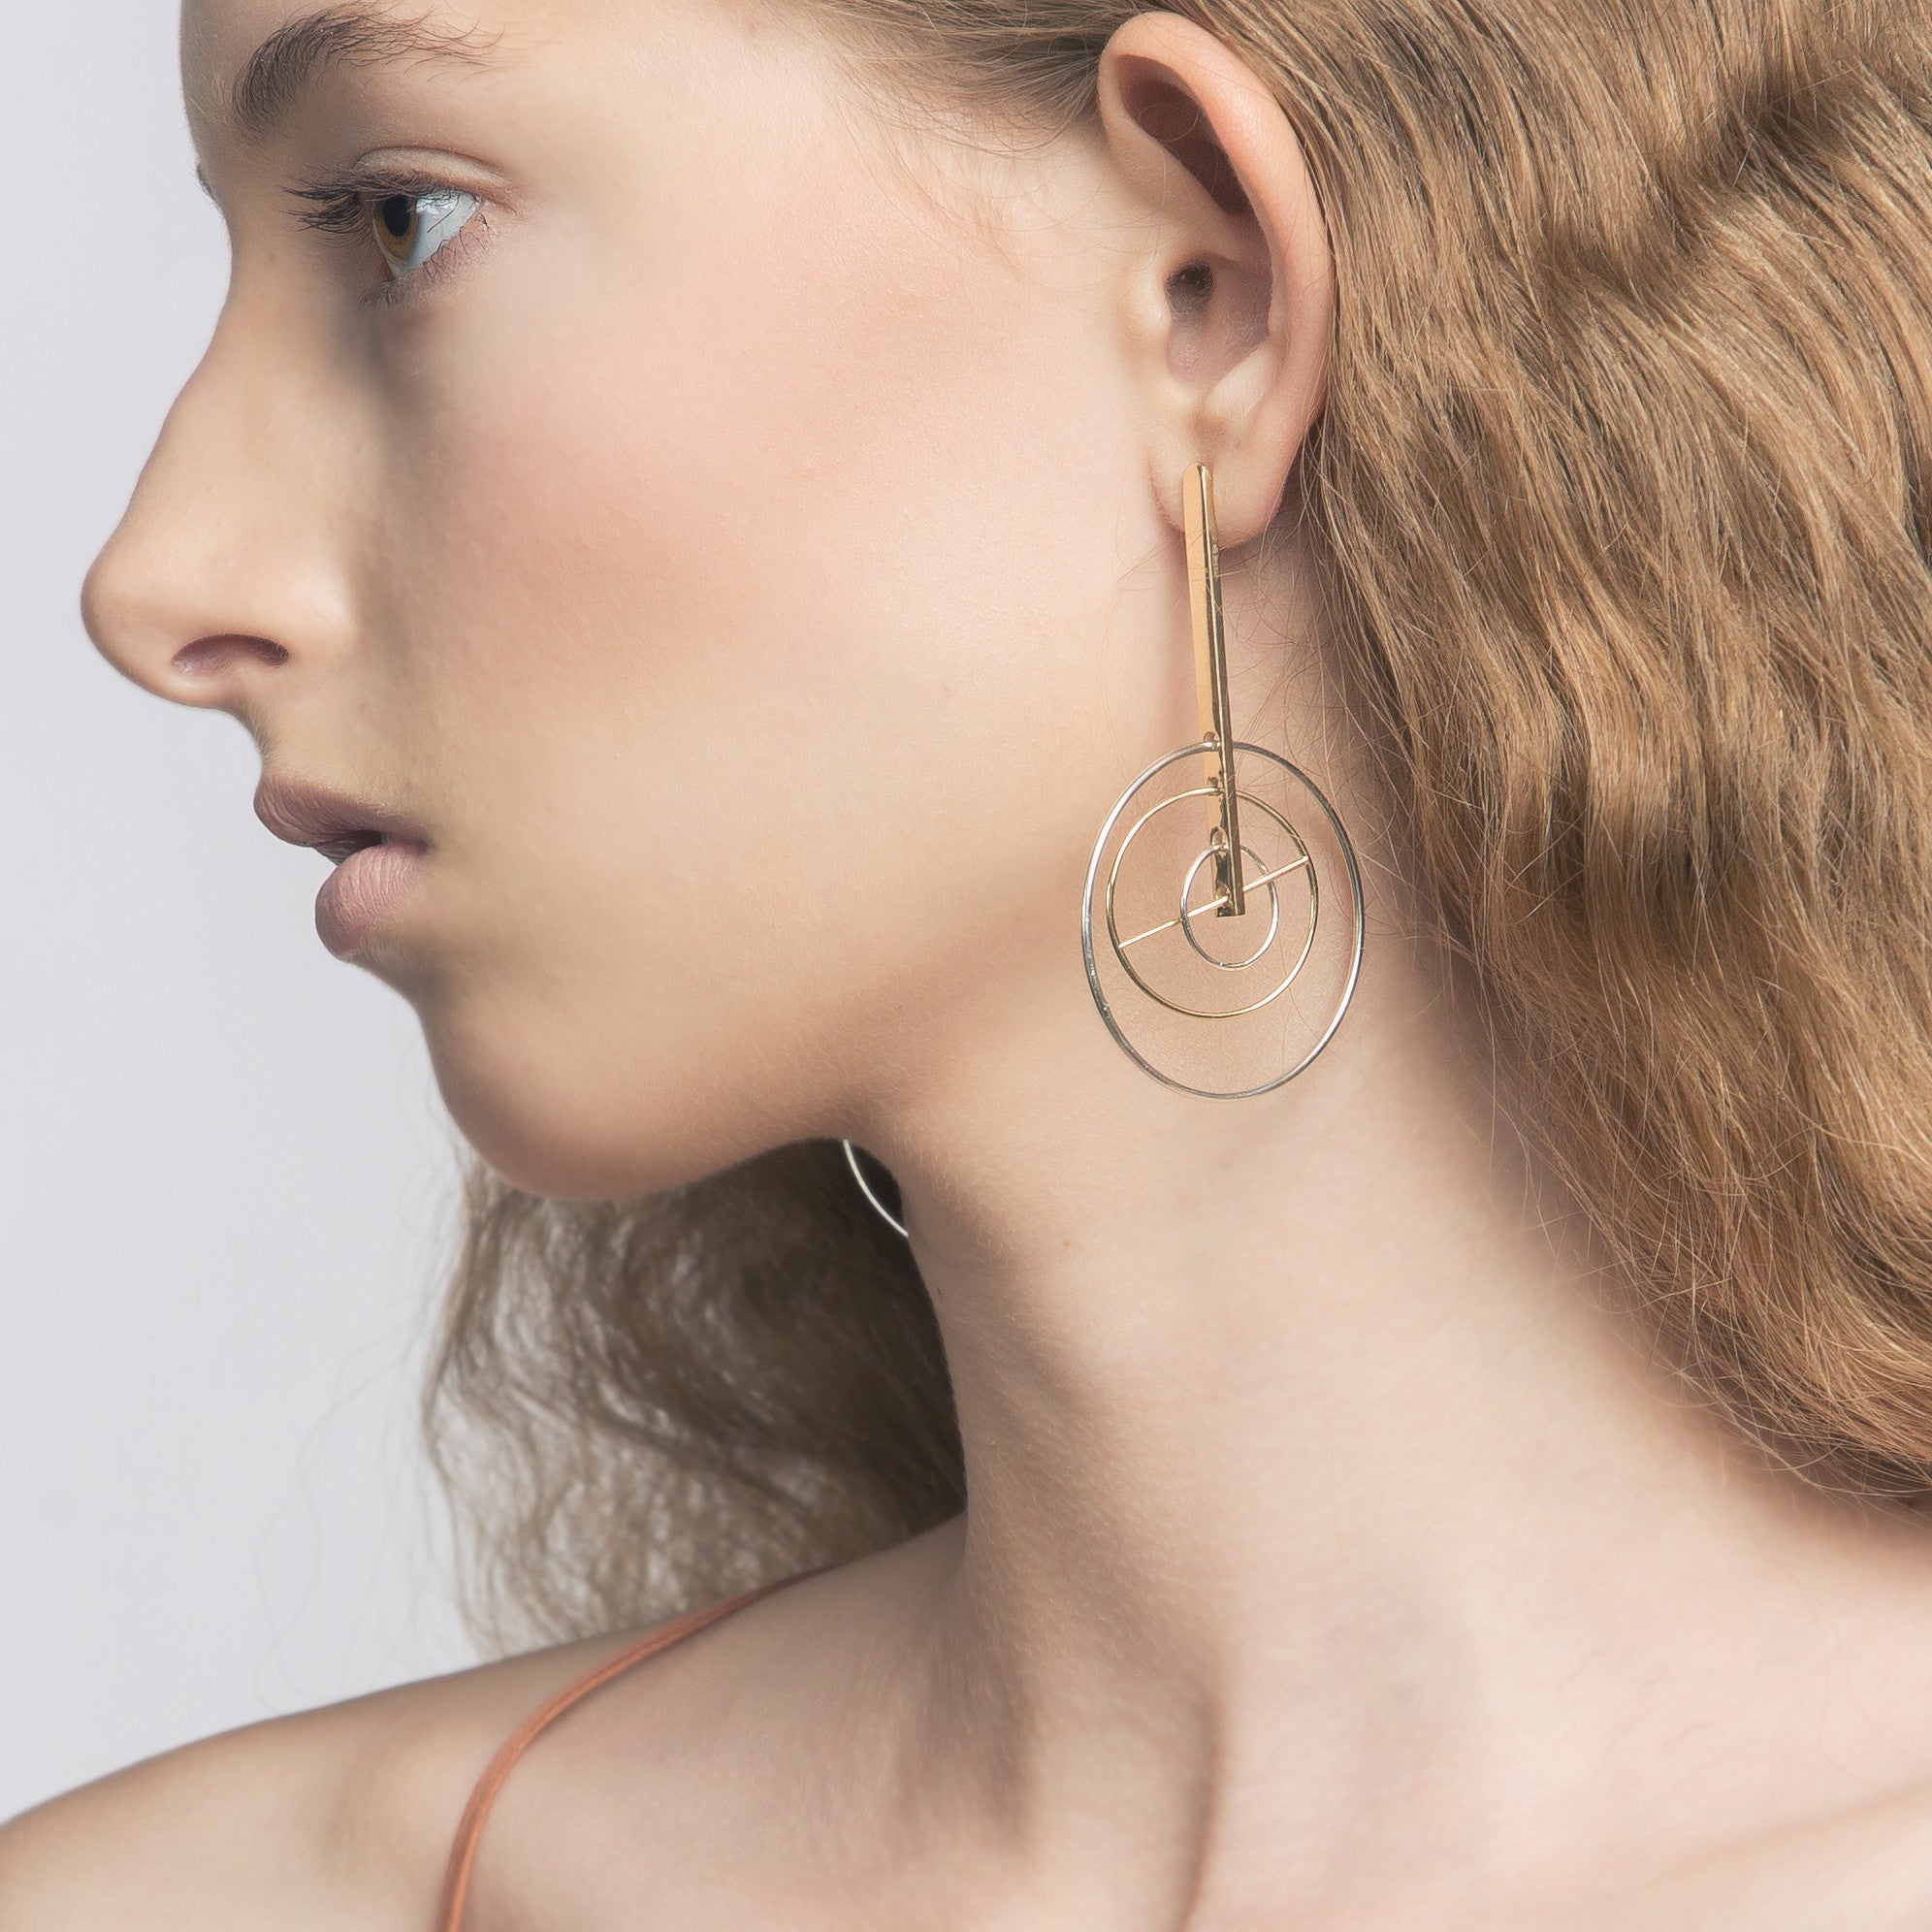 Kinetic Earring detail on model